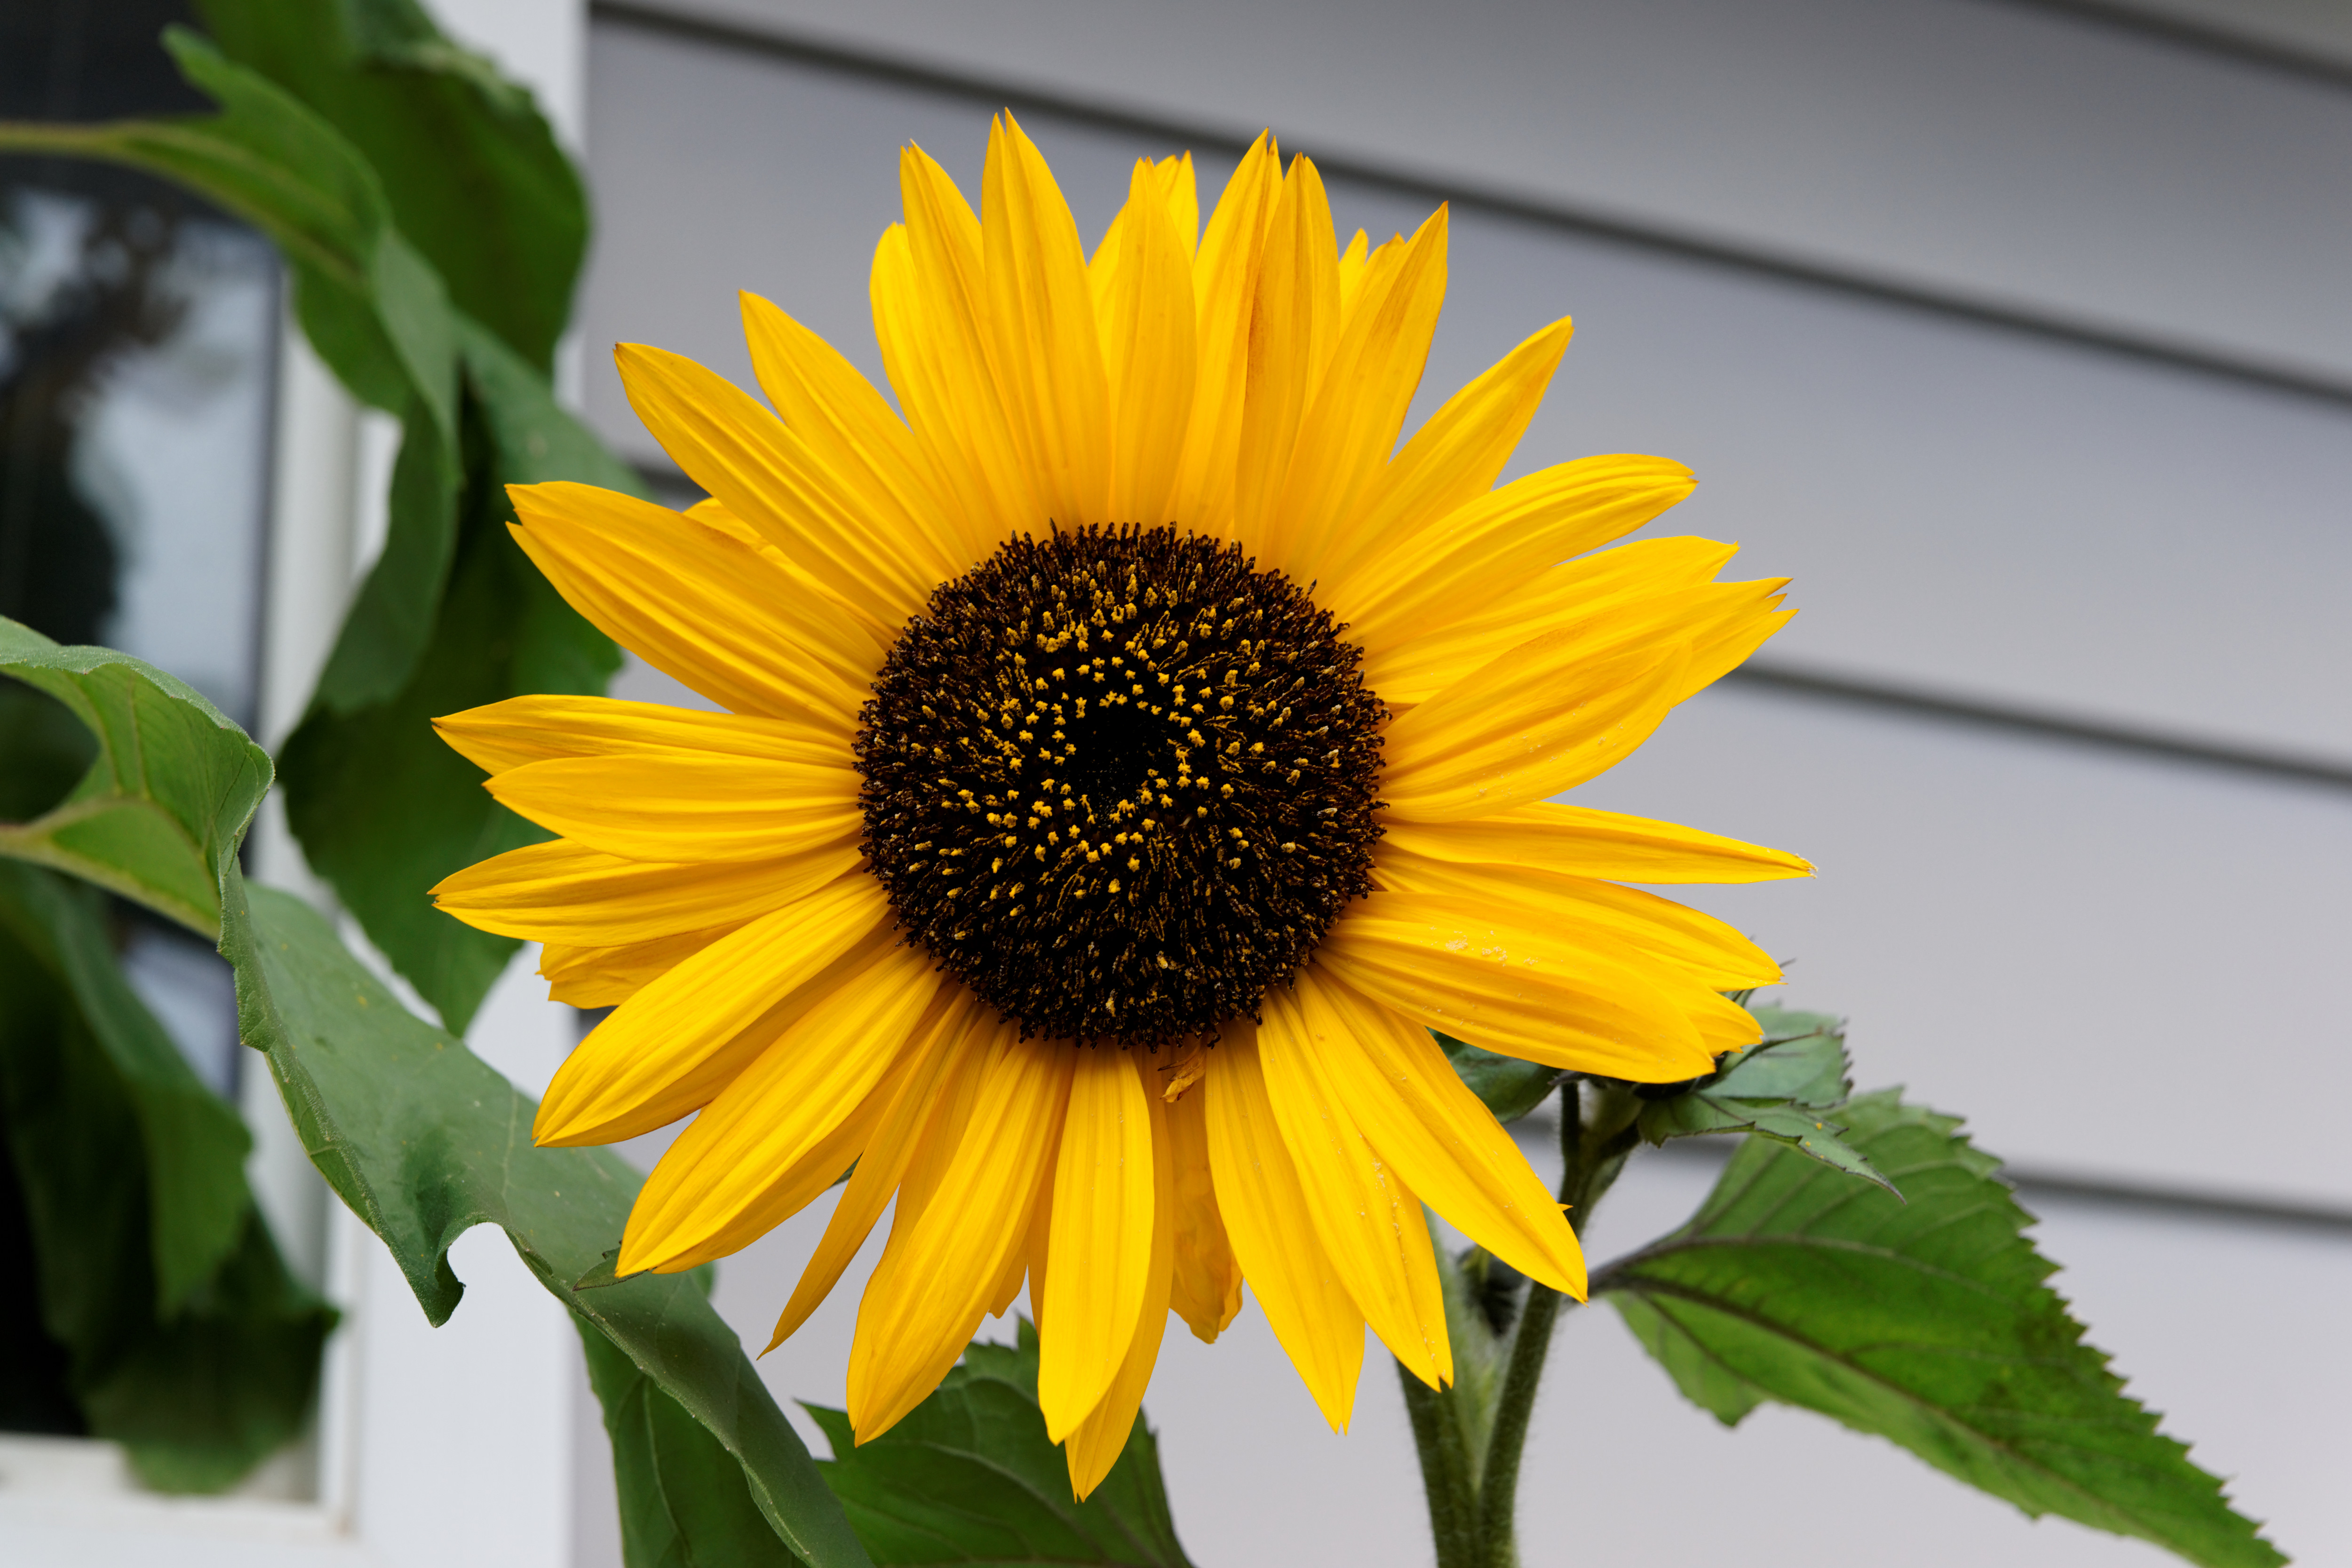 flowers, sunflowers, yellow flowers - desktop wallpaper